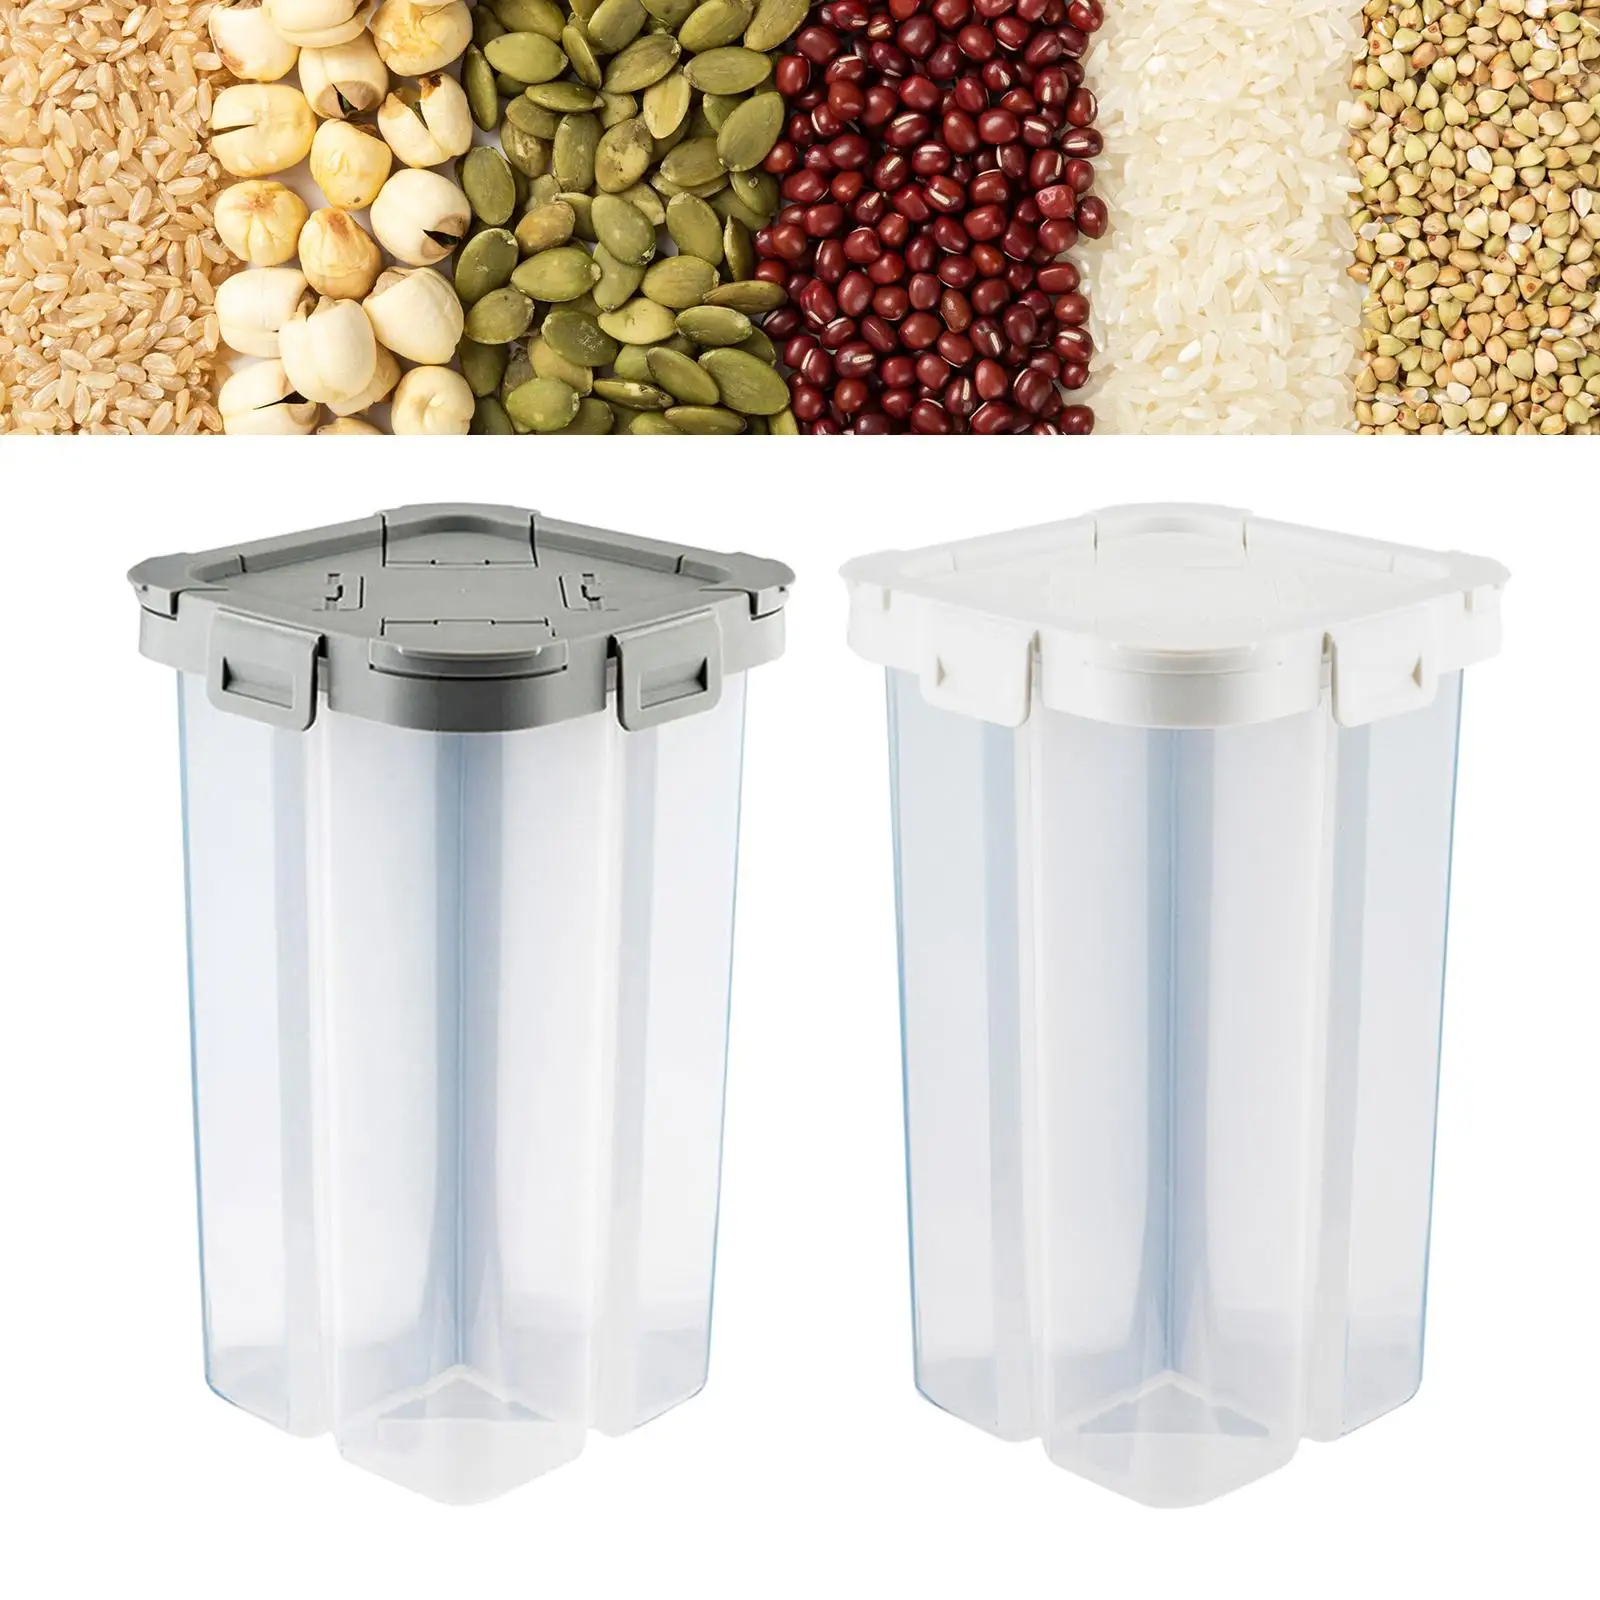 Airtight Cereal Storage Container 2.3L Food Storage Bins Rice Grain Storage